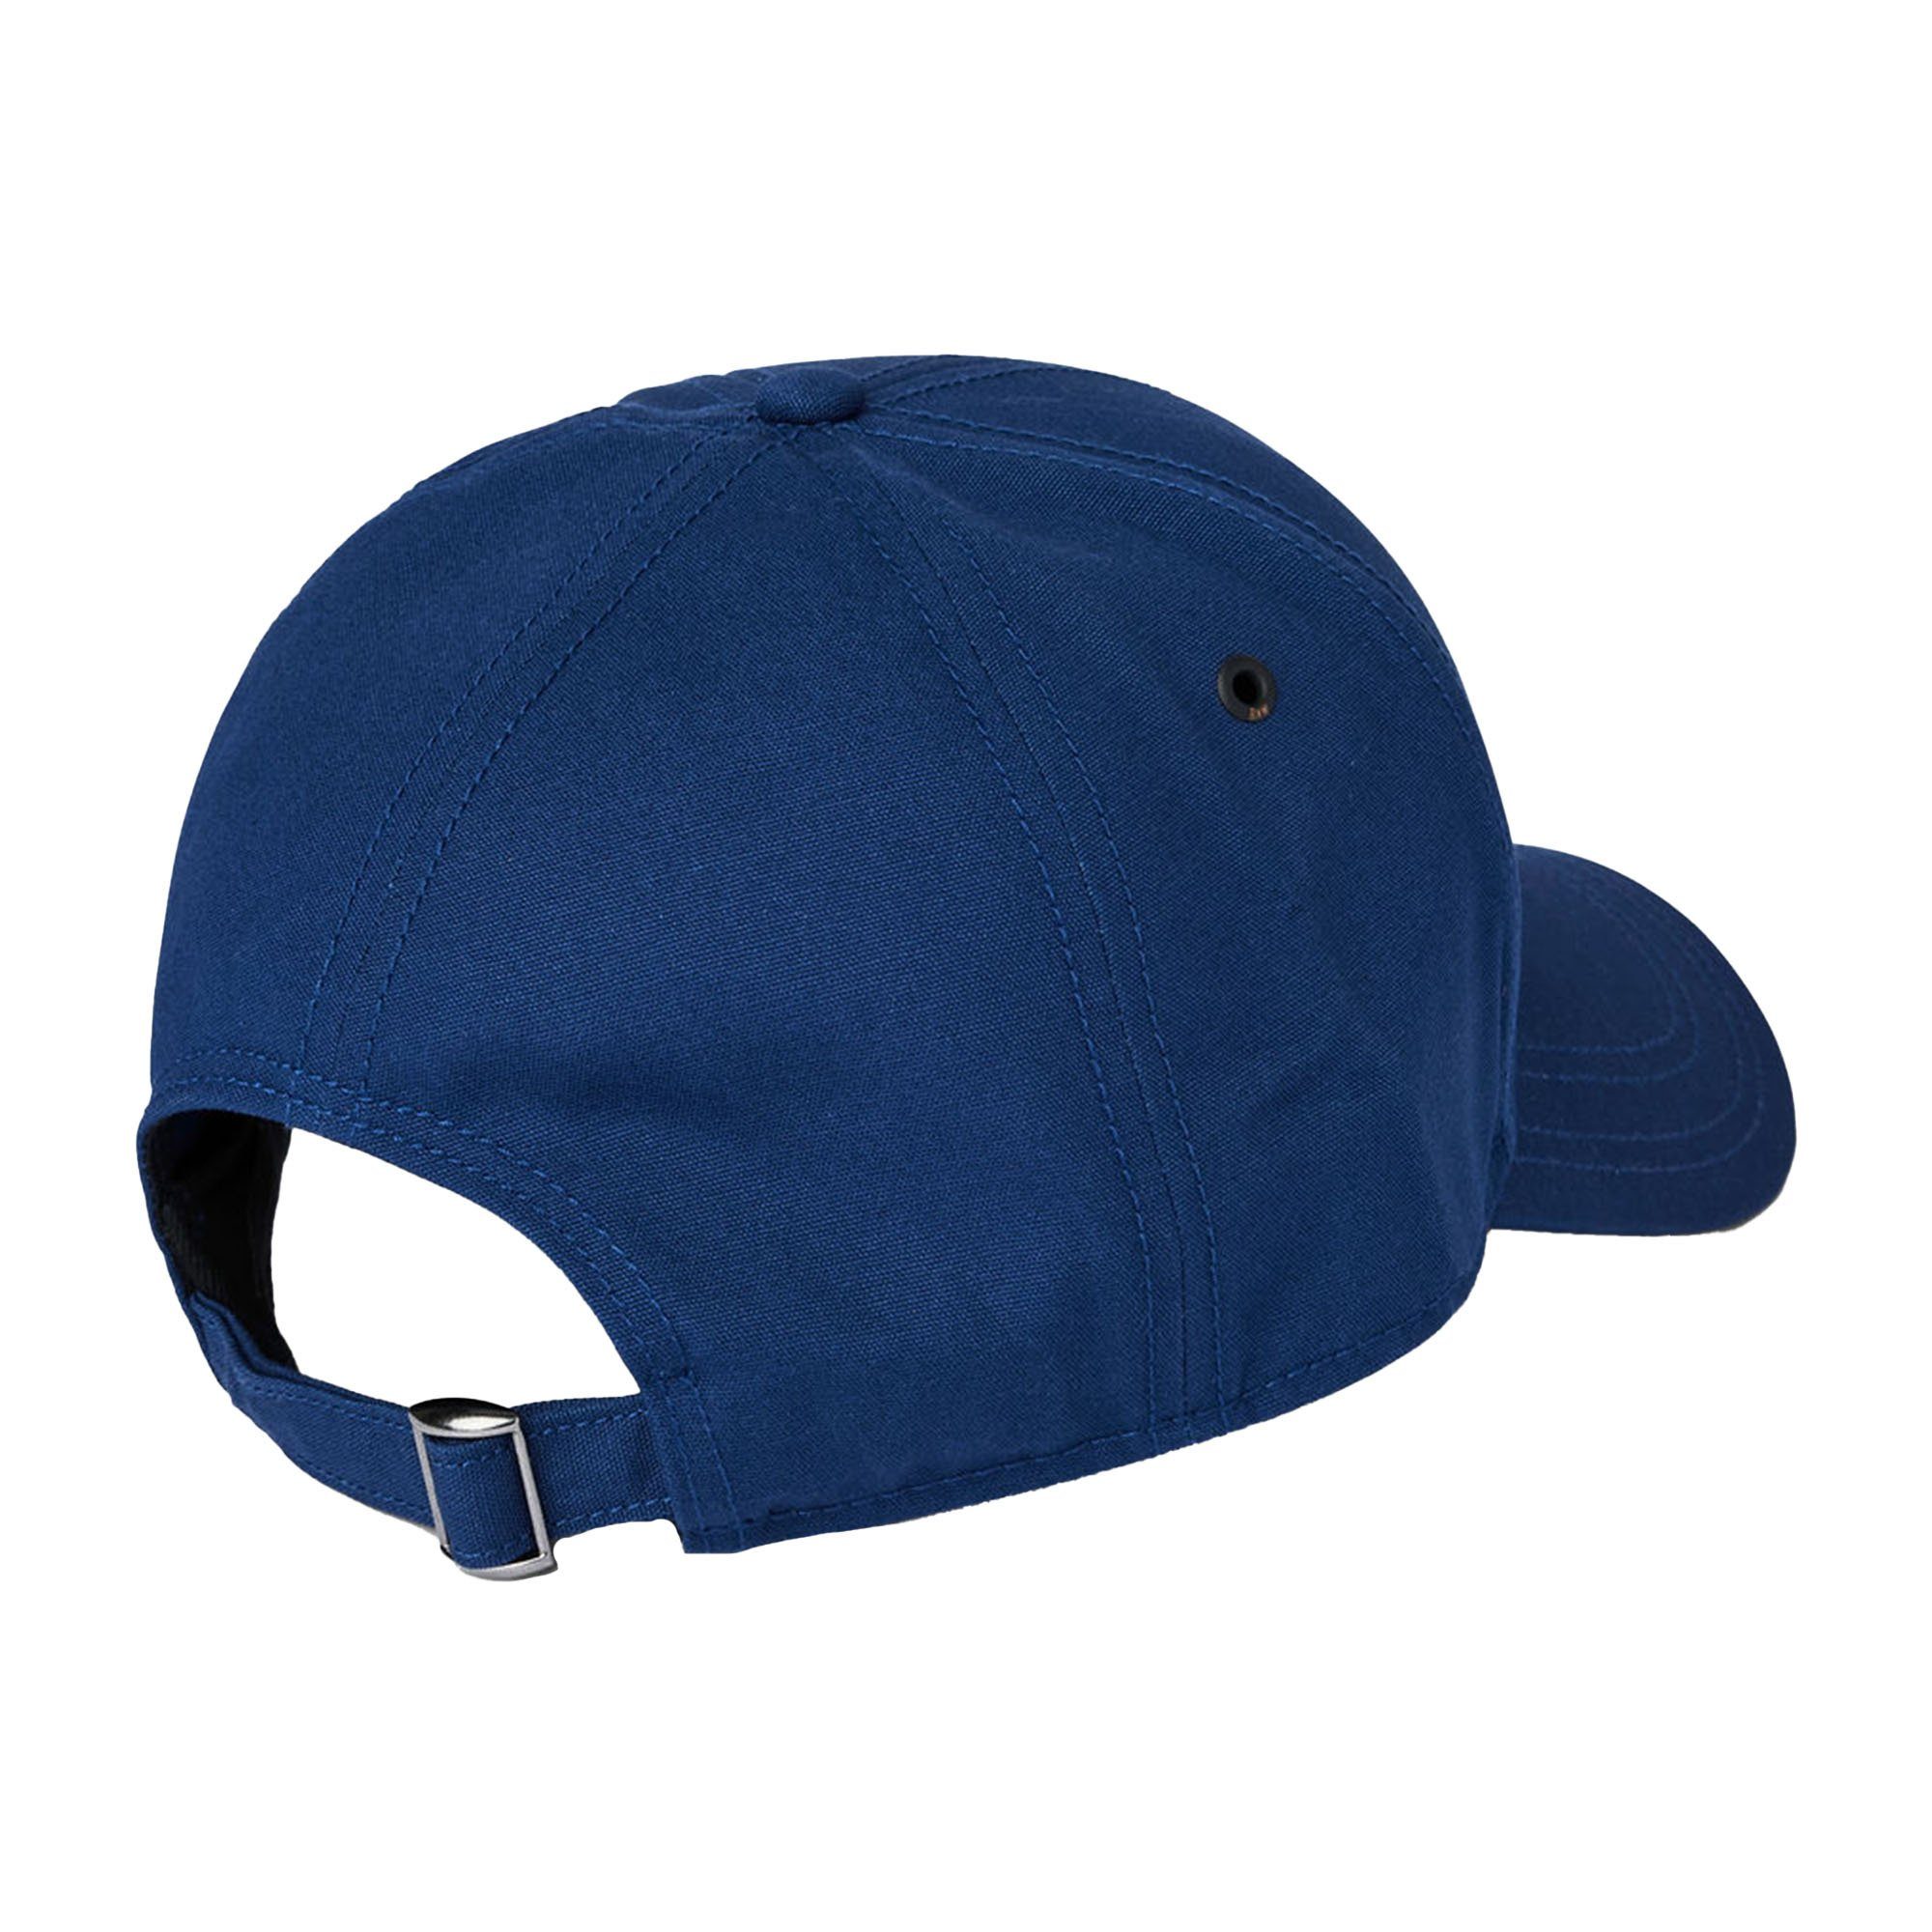 G-Star Herren Originals Cap Blau RAW - Käppi, Logo cap, baseball Cap Baseball